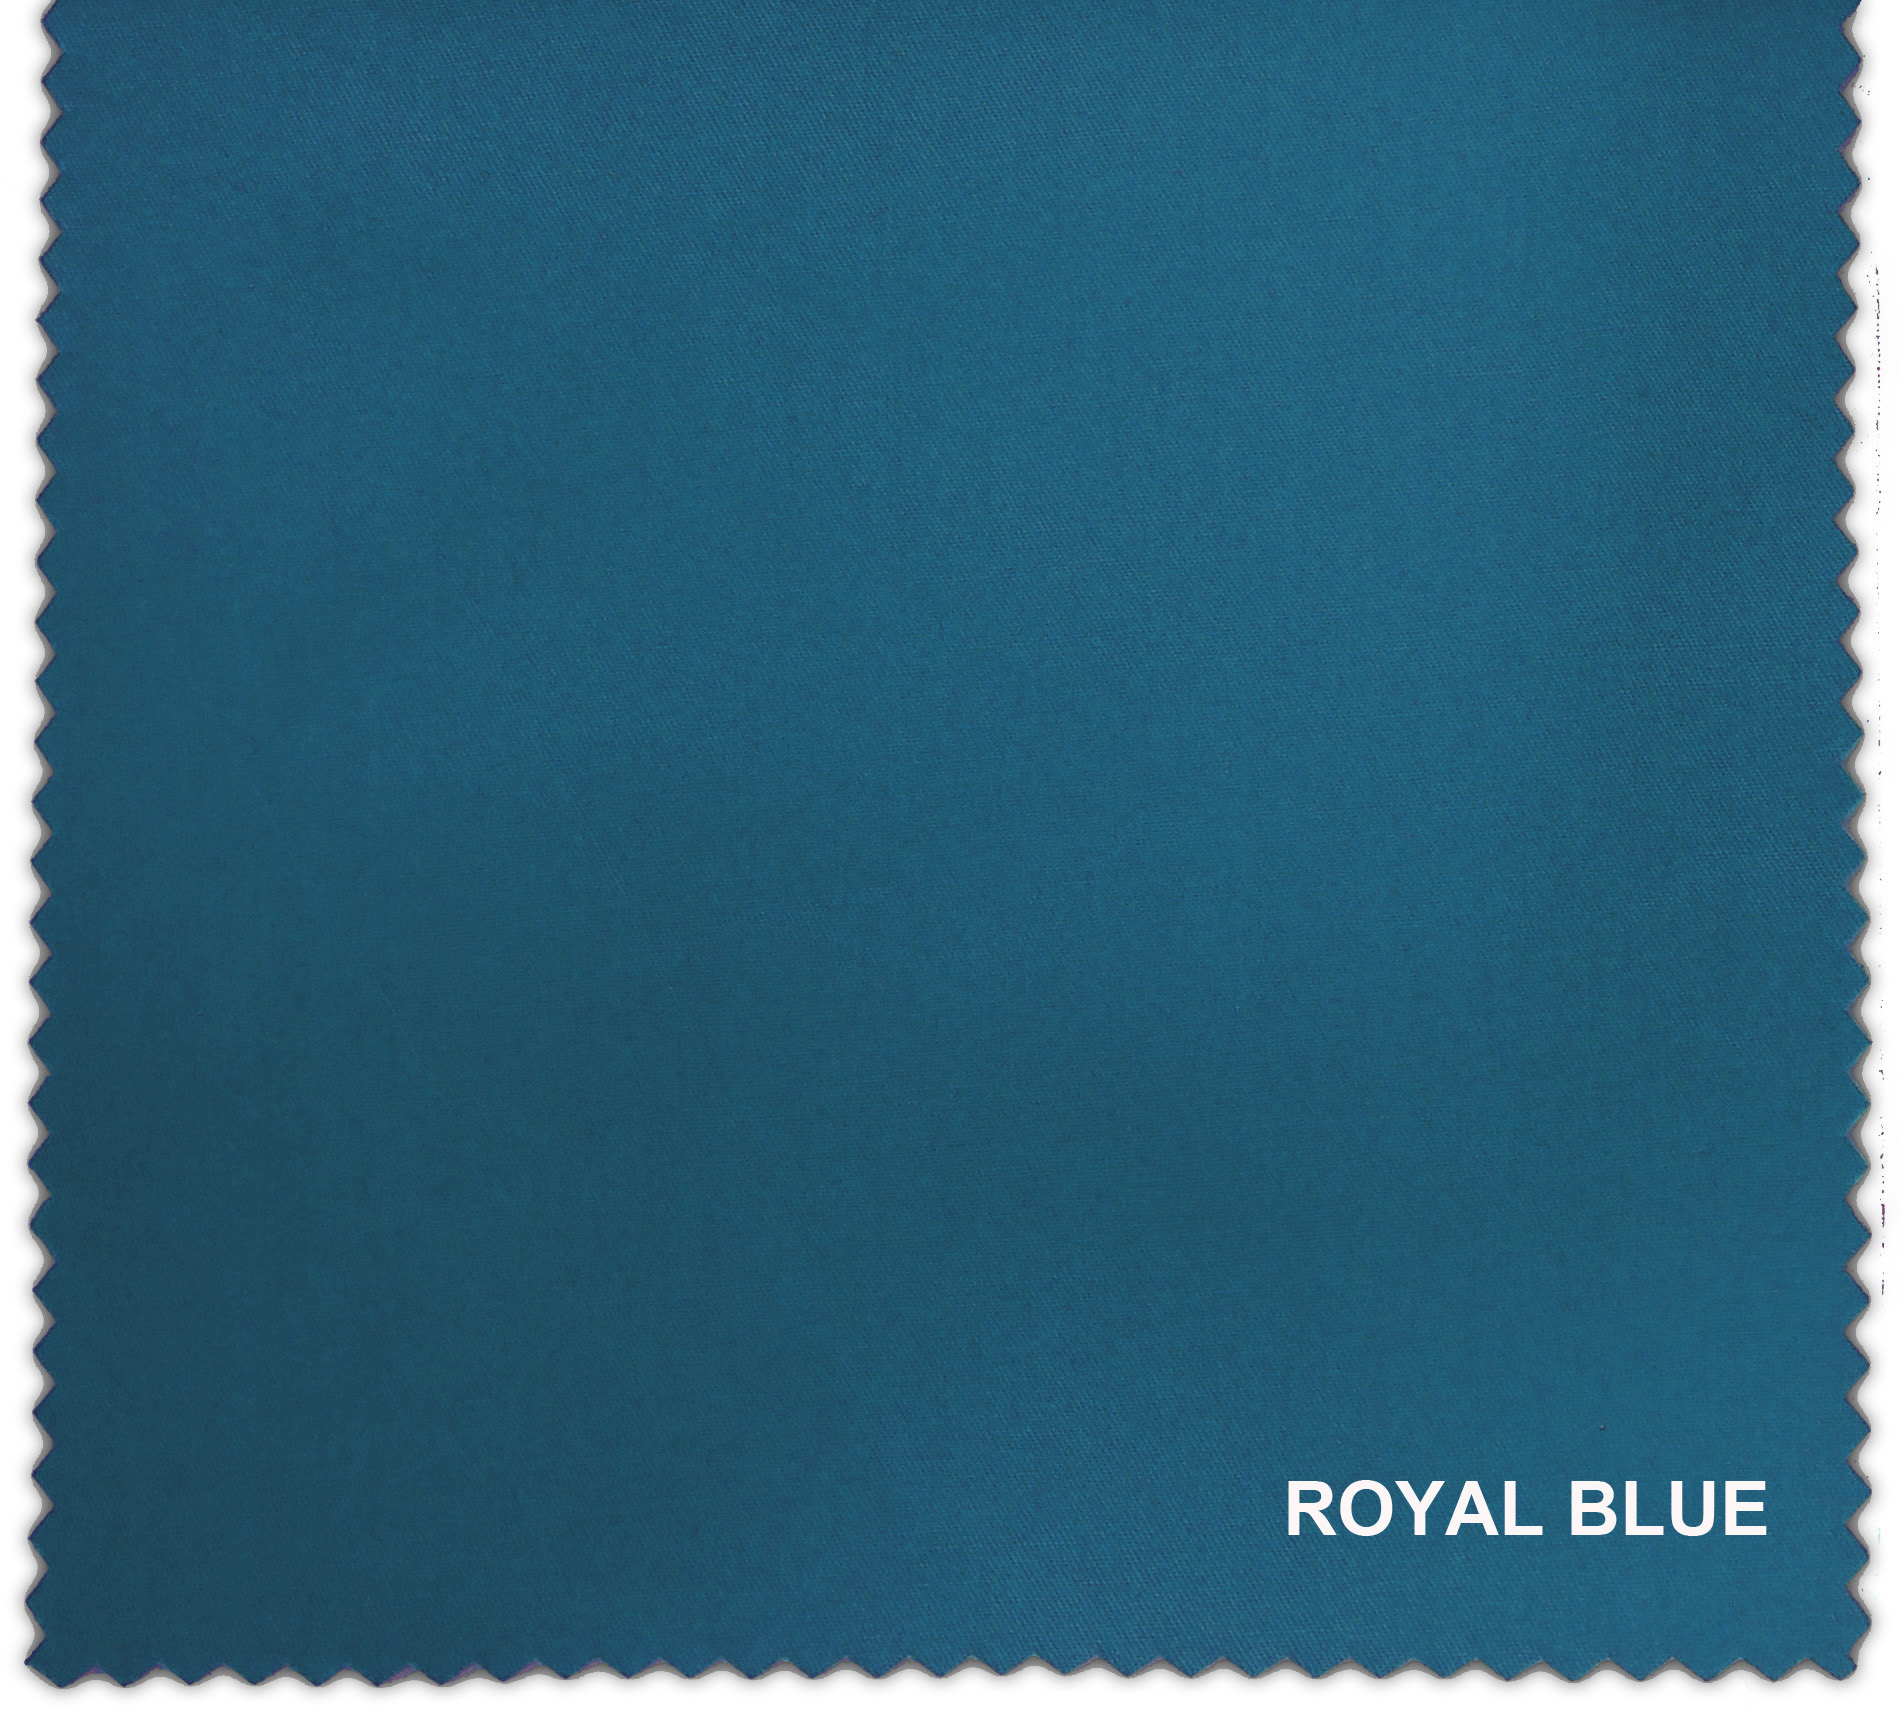 ROYAL BLUE